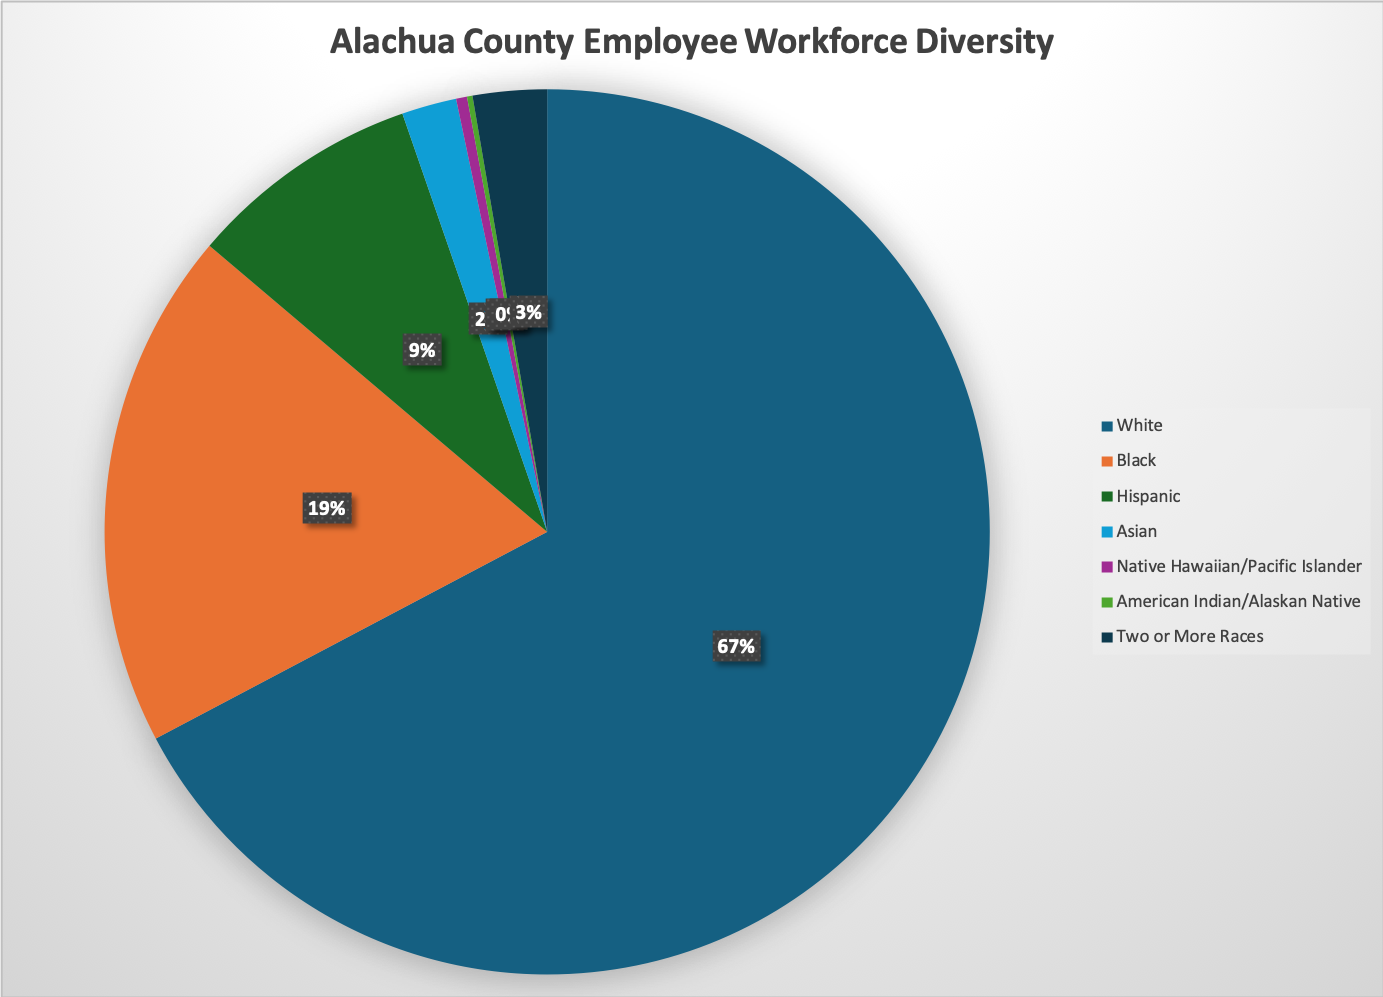 Pie chart displaying Alachua County's workforce diversity: 70% white, 20% black/African American, 6% Hispanic, 1% Asian, 1% Native Hawaiian/Pacific Islander, 0% American Indian/Alaskan Native, 2% Two or more races